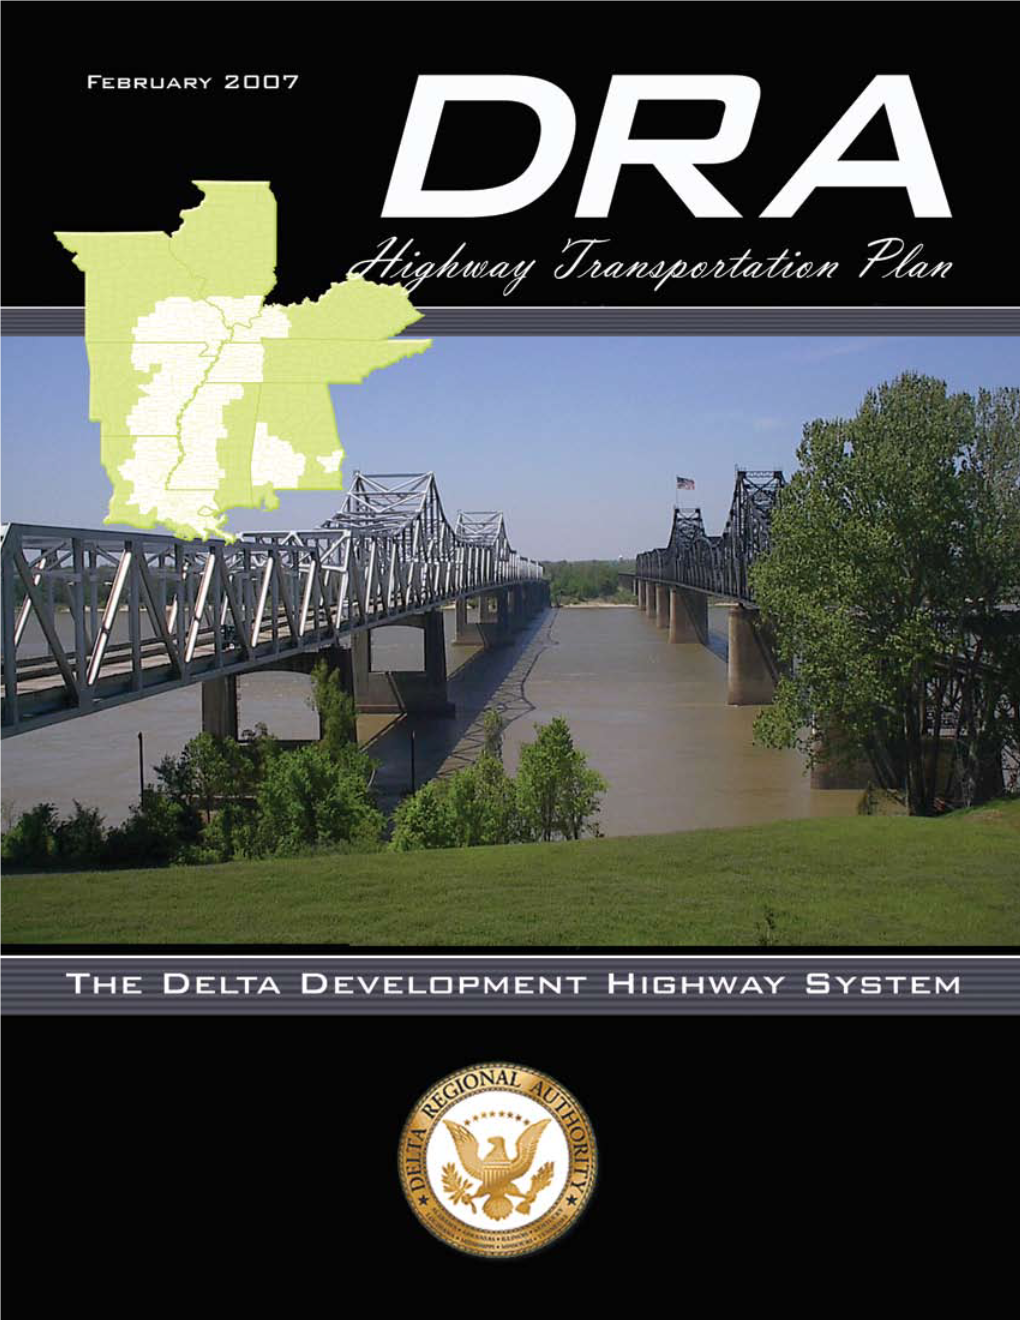 DRA “Delta Development Highway System” Plan Page I